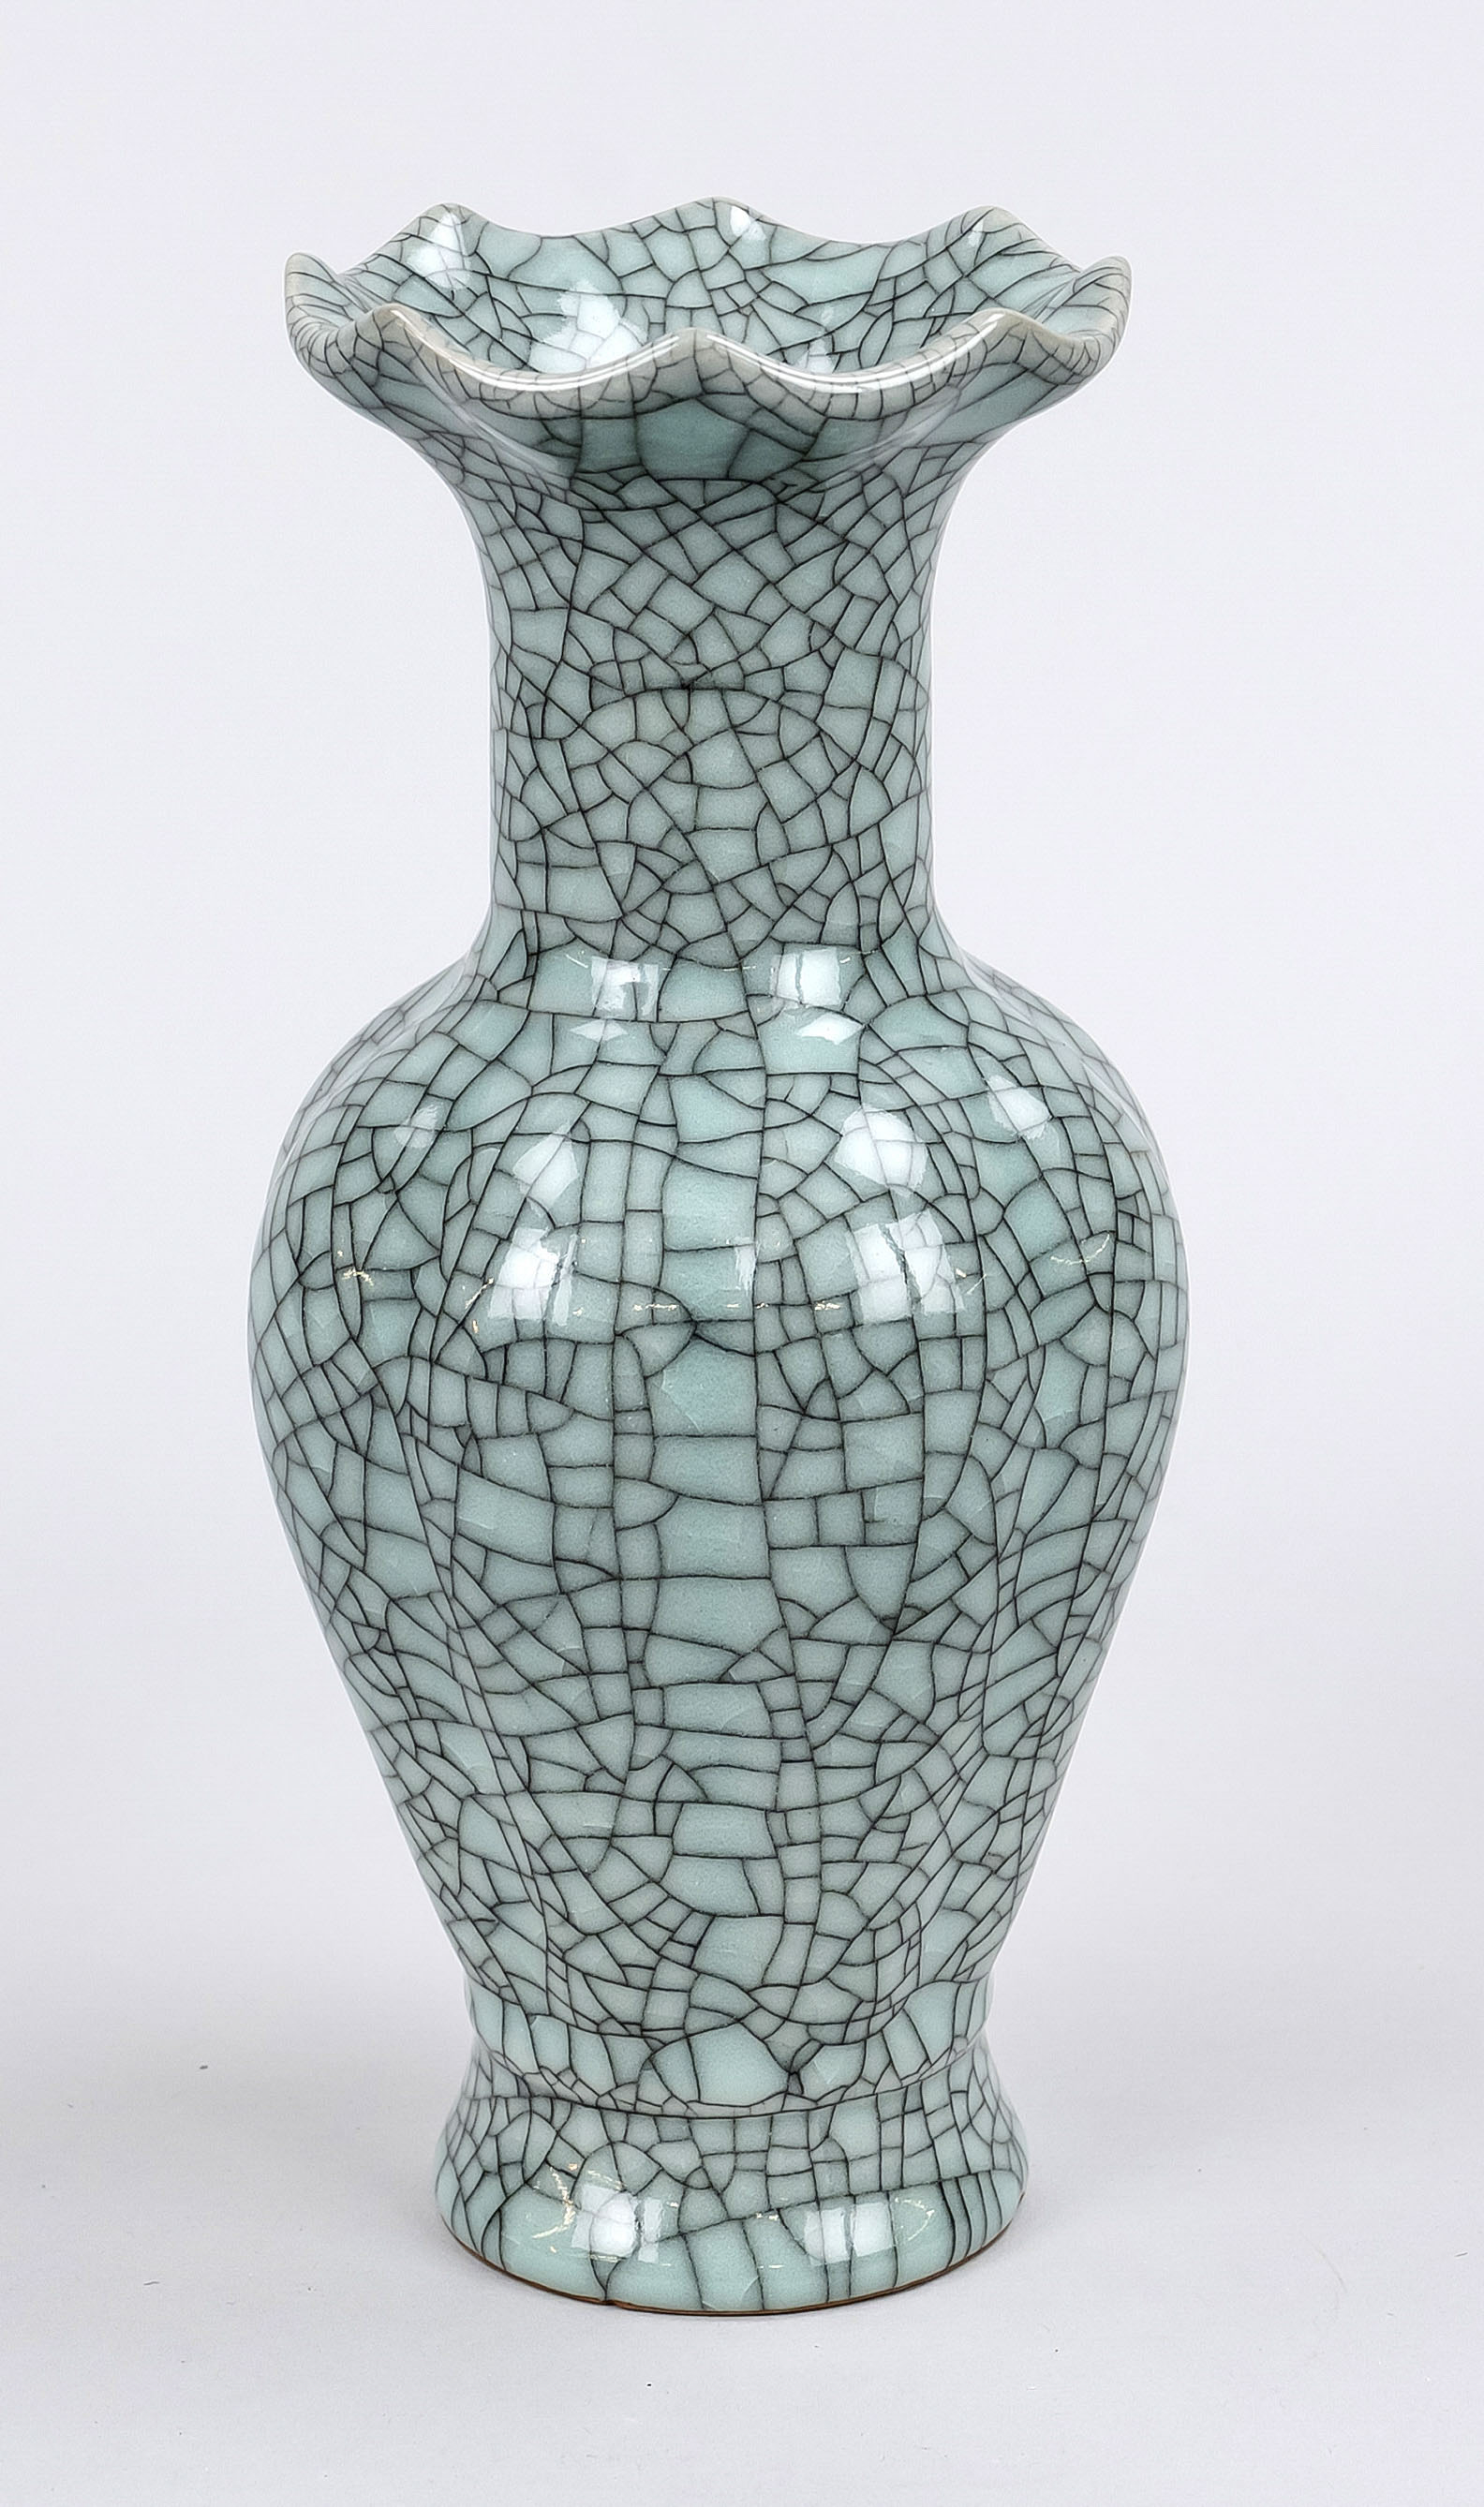 Song style vase with Ge glaze, China, Chaoxing, 20th century, stoneware vase with dove blue glaze